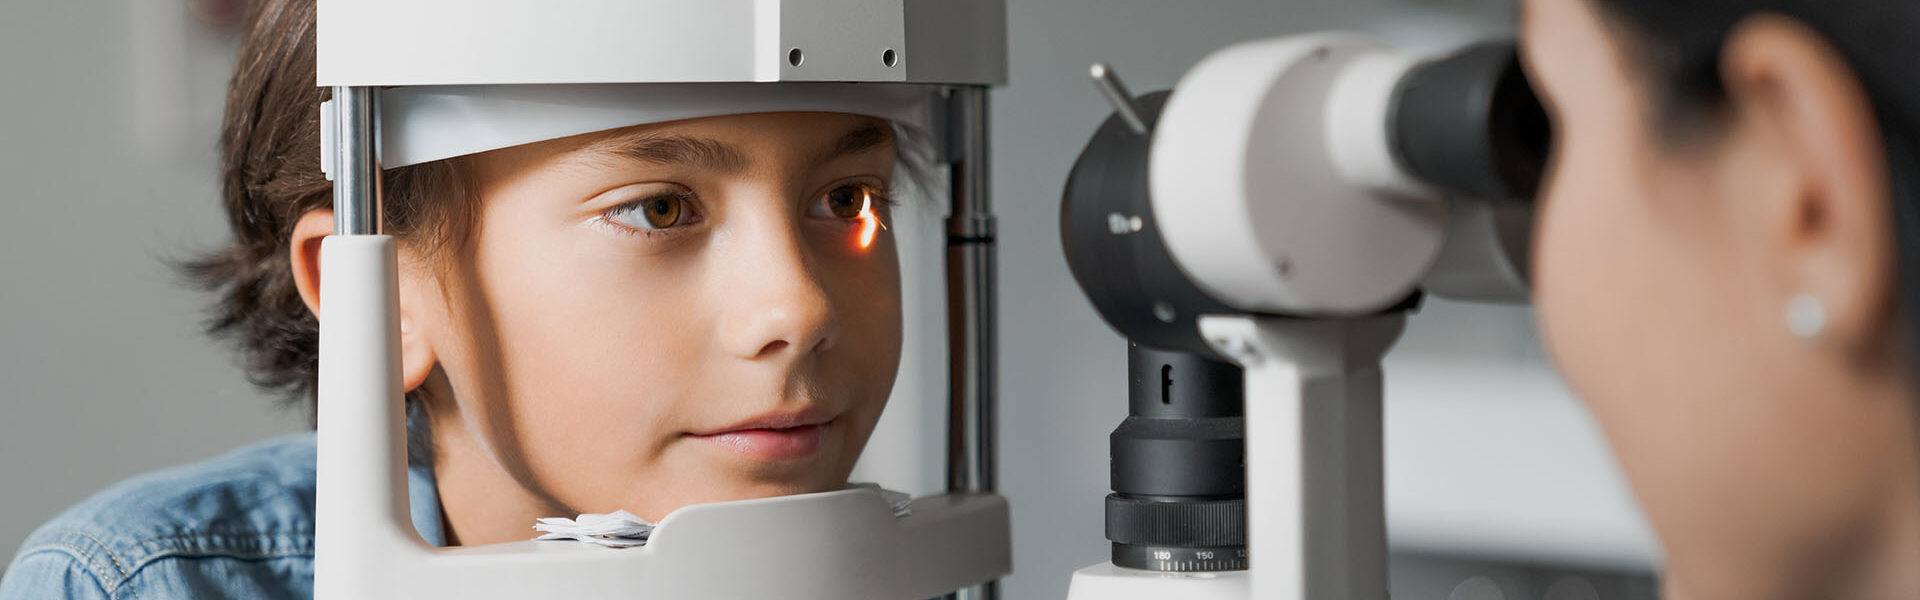 Eye Exam, Child, Medical Exam, Eye Test Equipment, Ophthalmologist